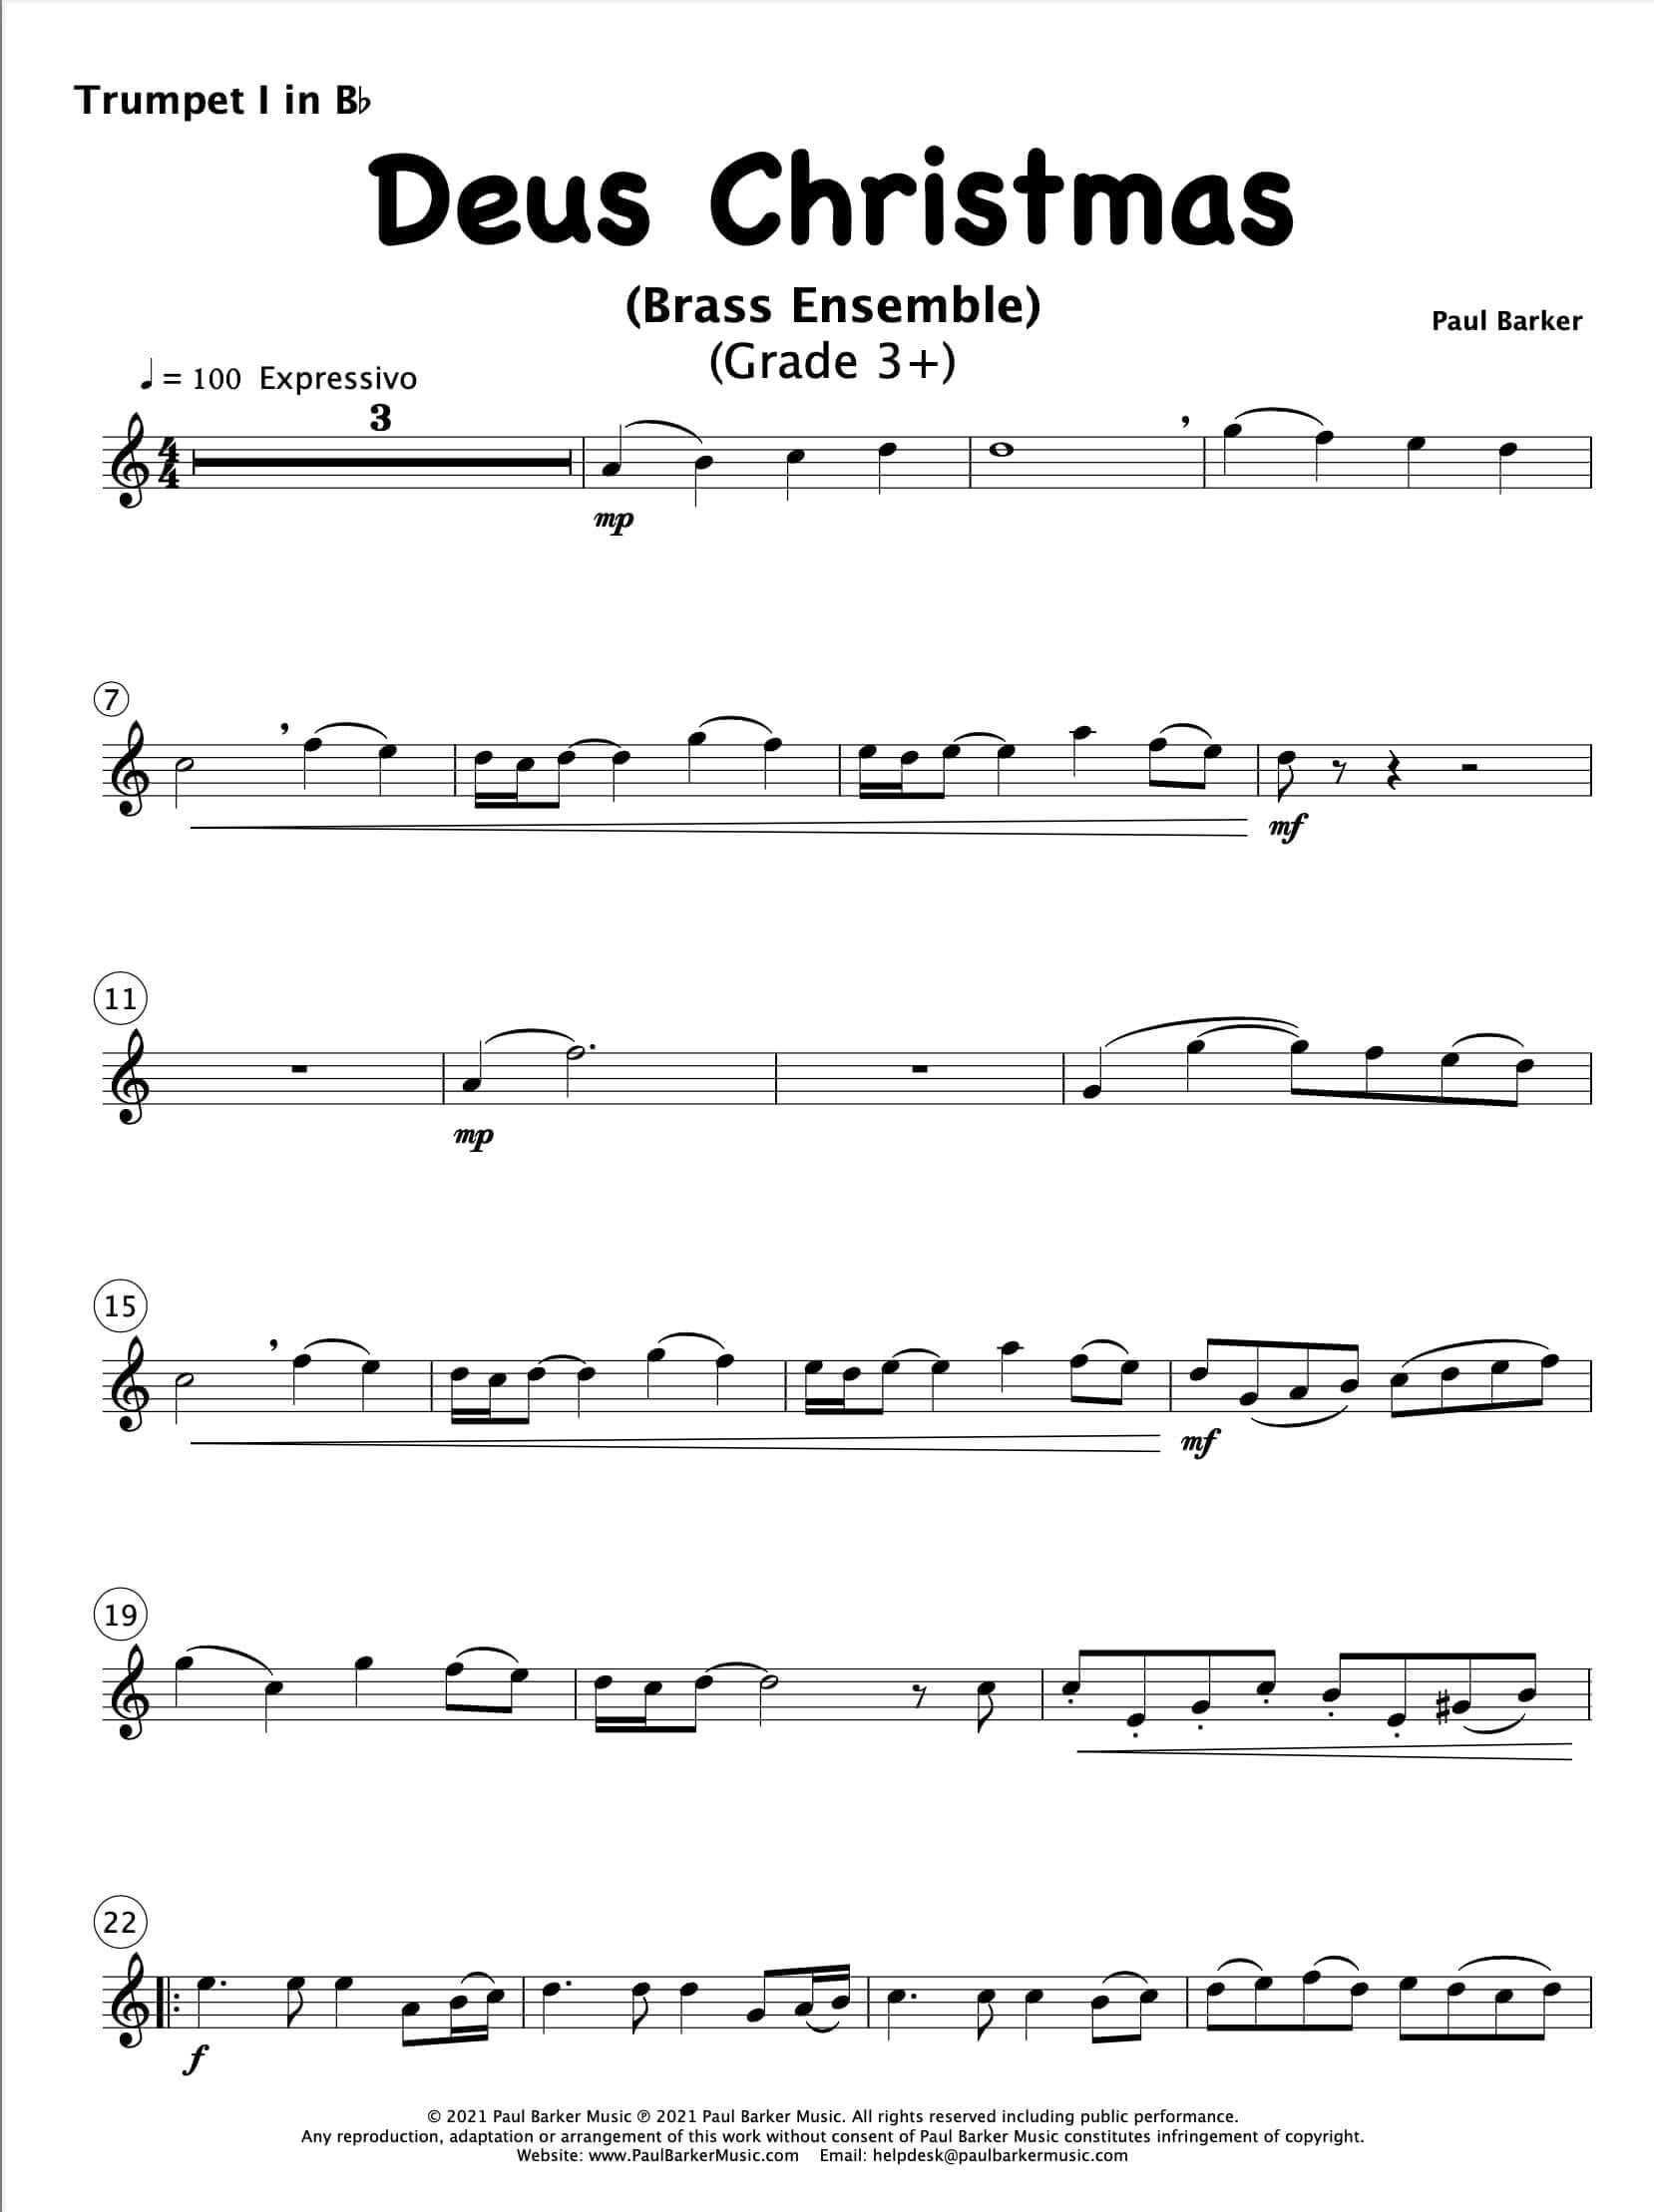 Deus Christmas (Brass Ensemble) - Paul Barker Music 